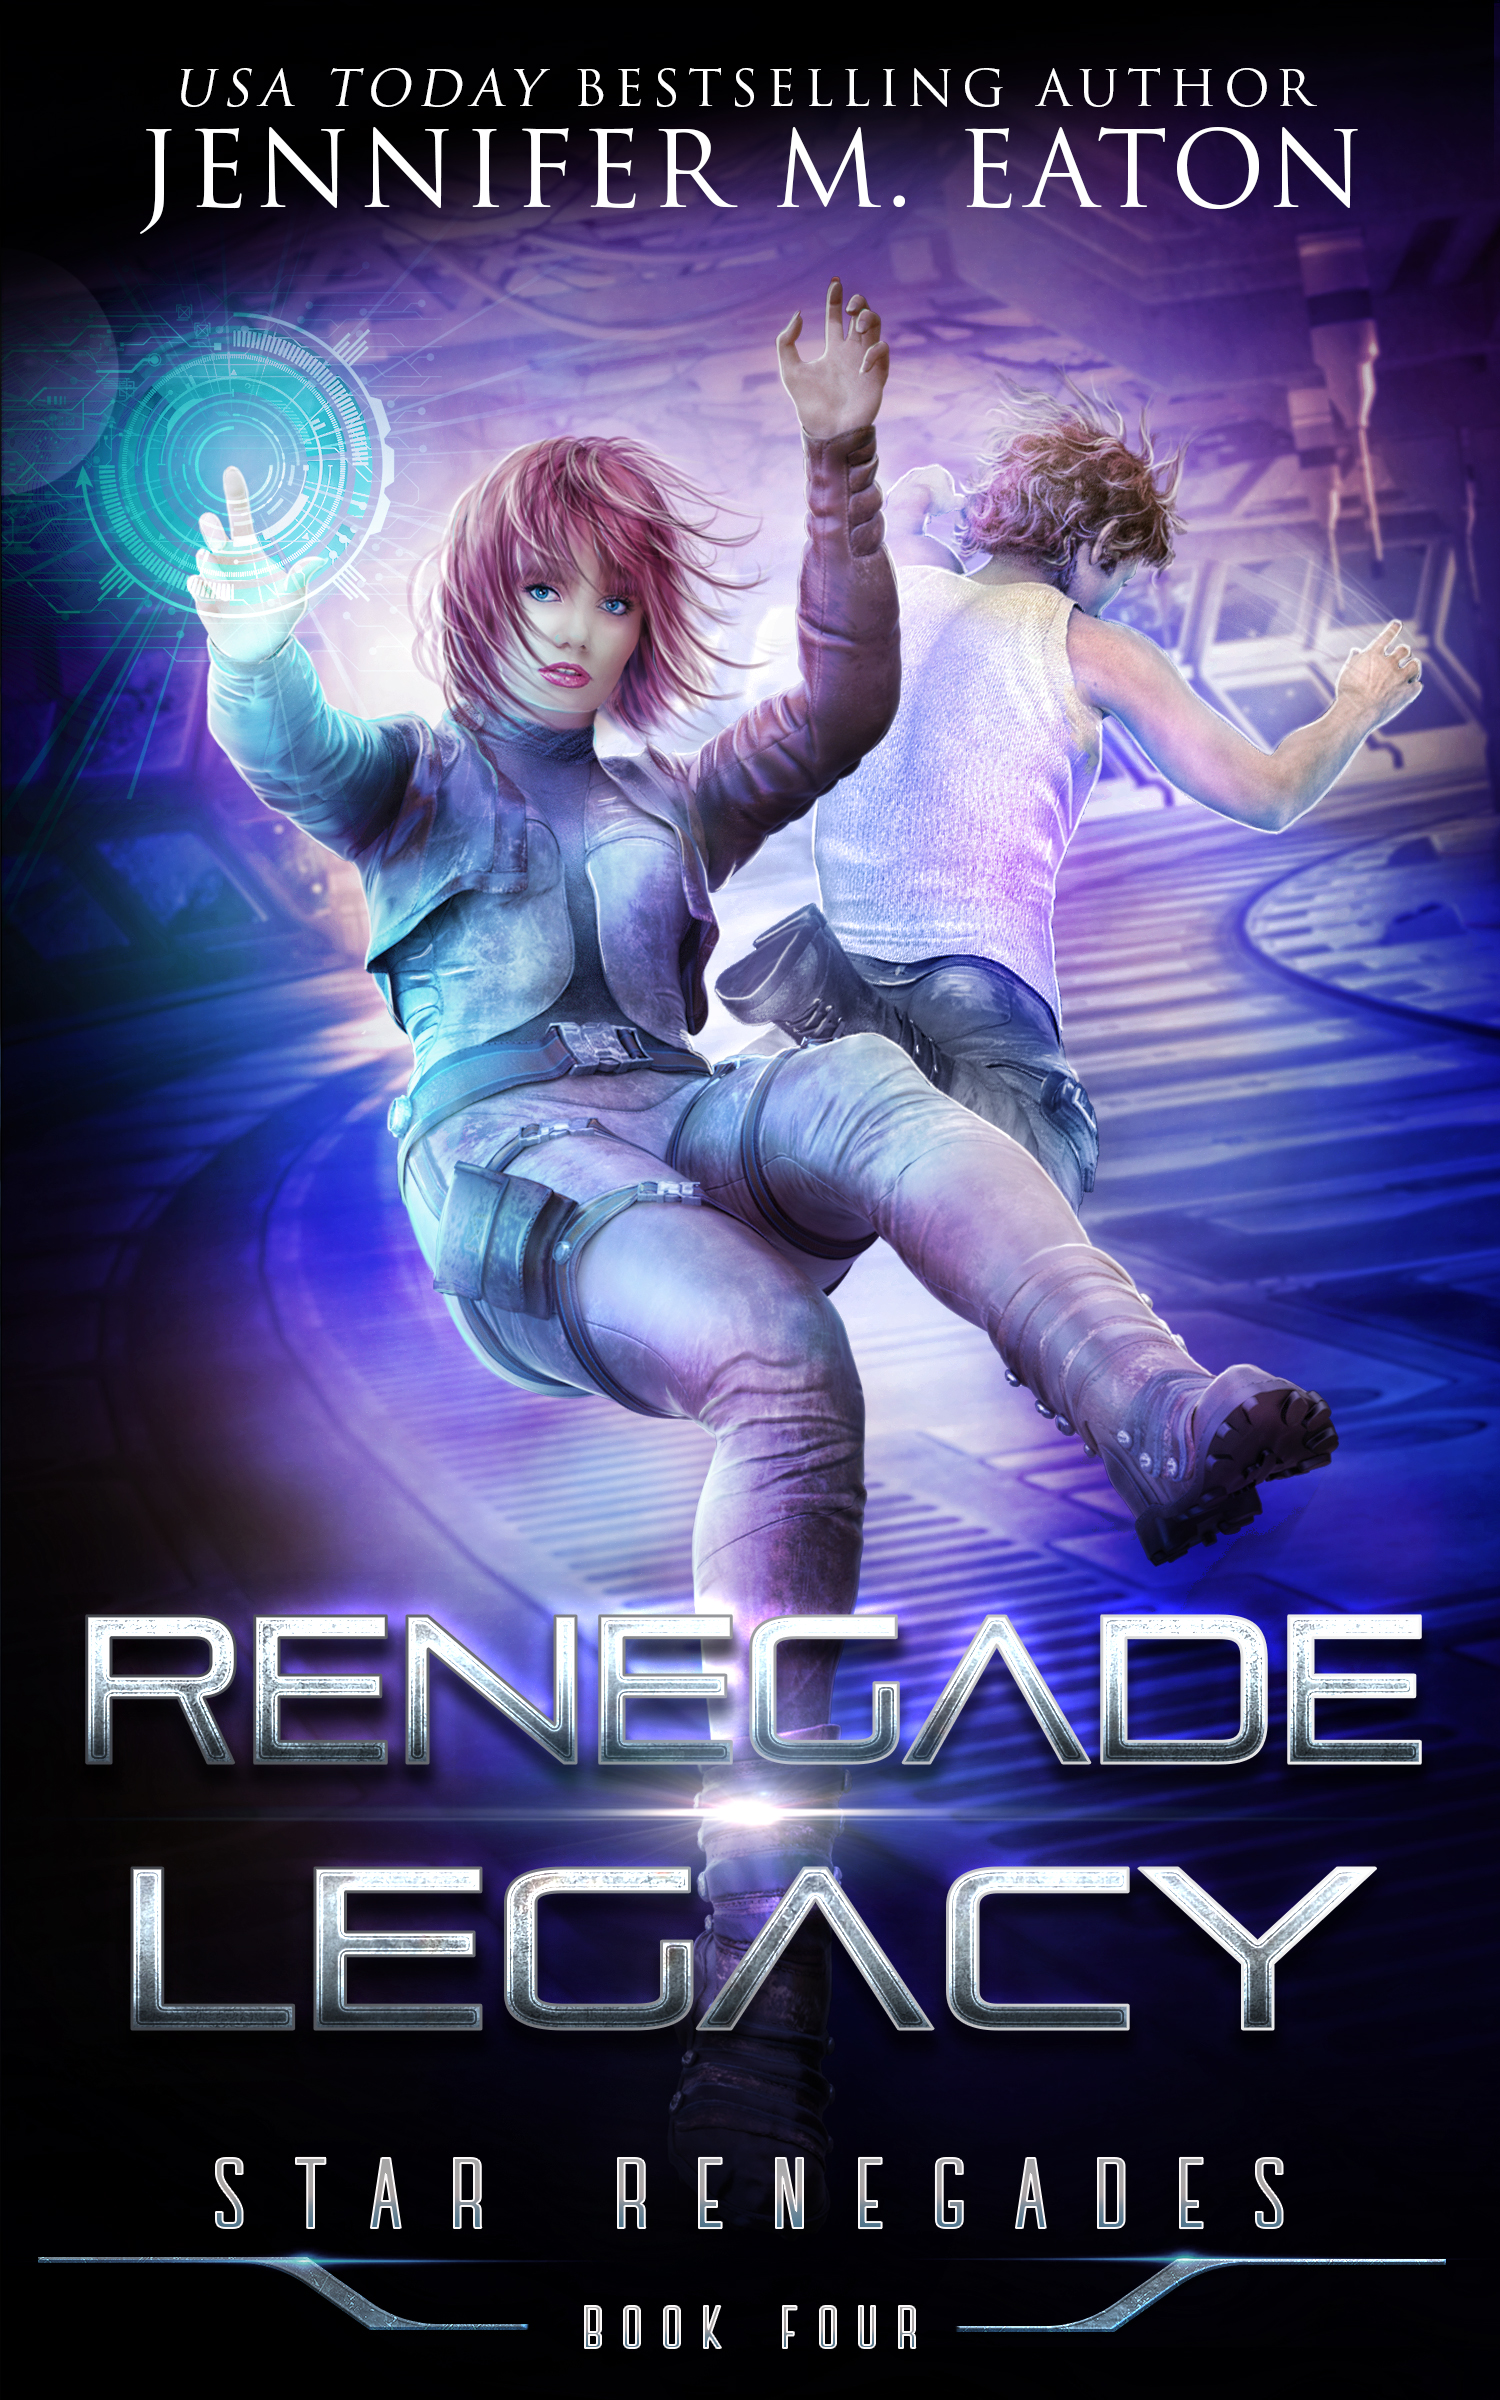 Star Renegades 4book four